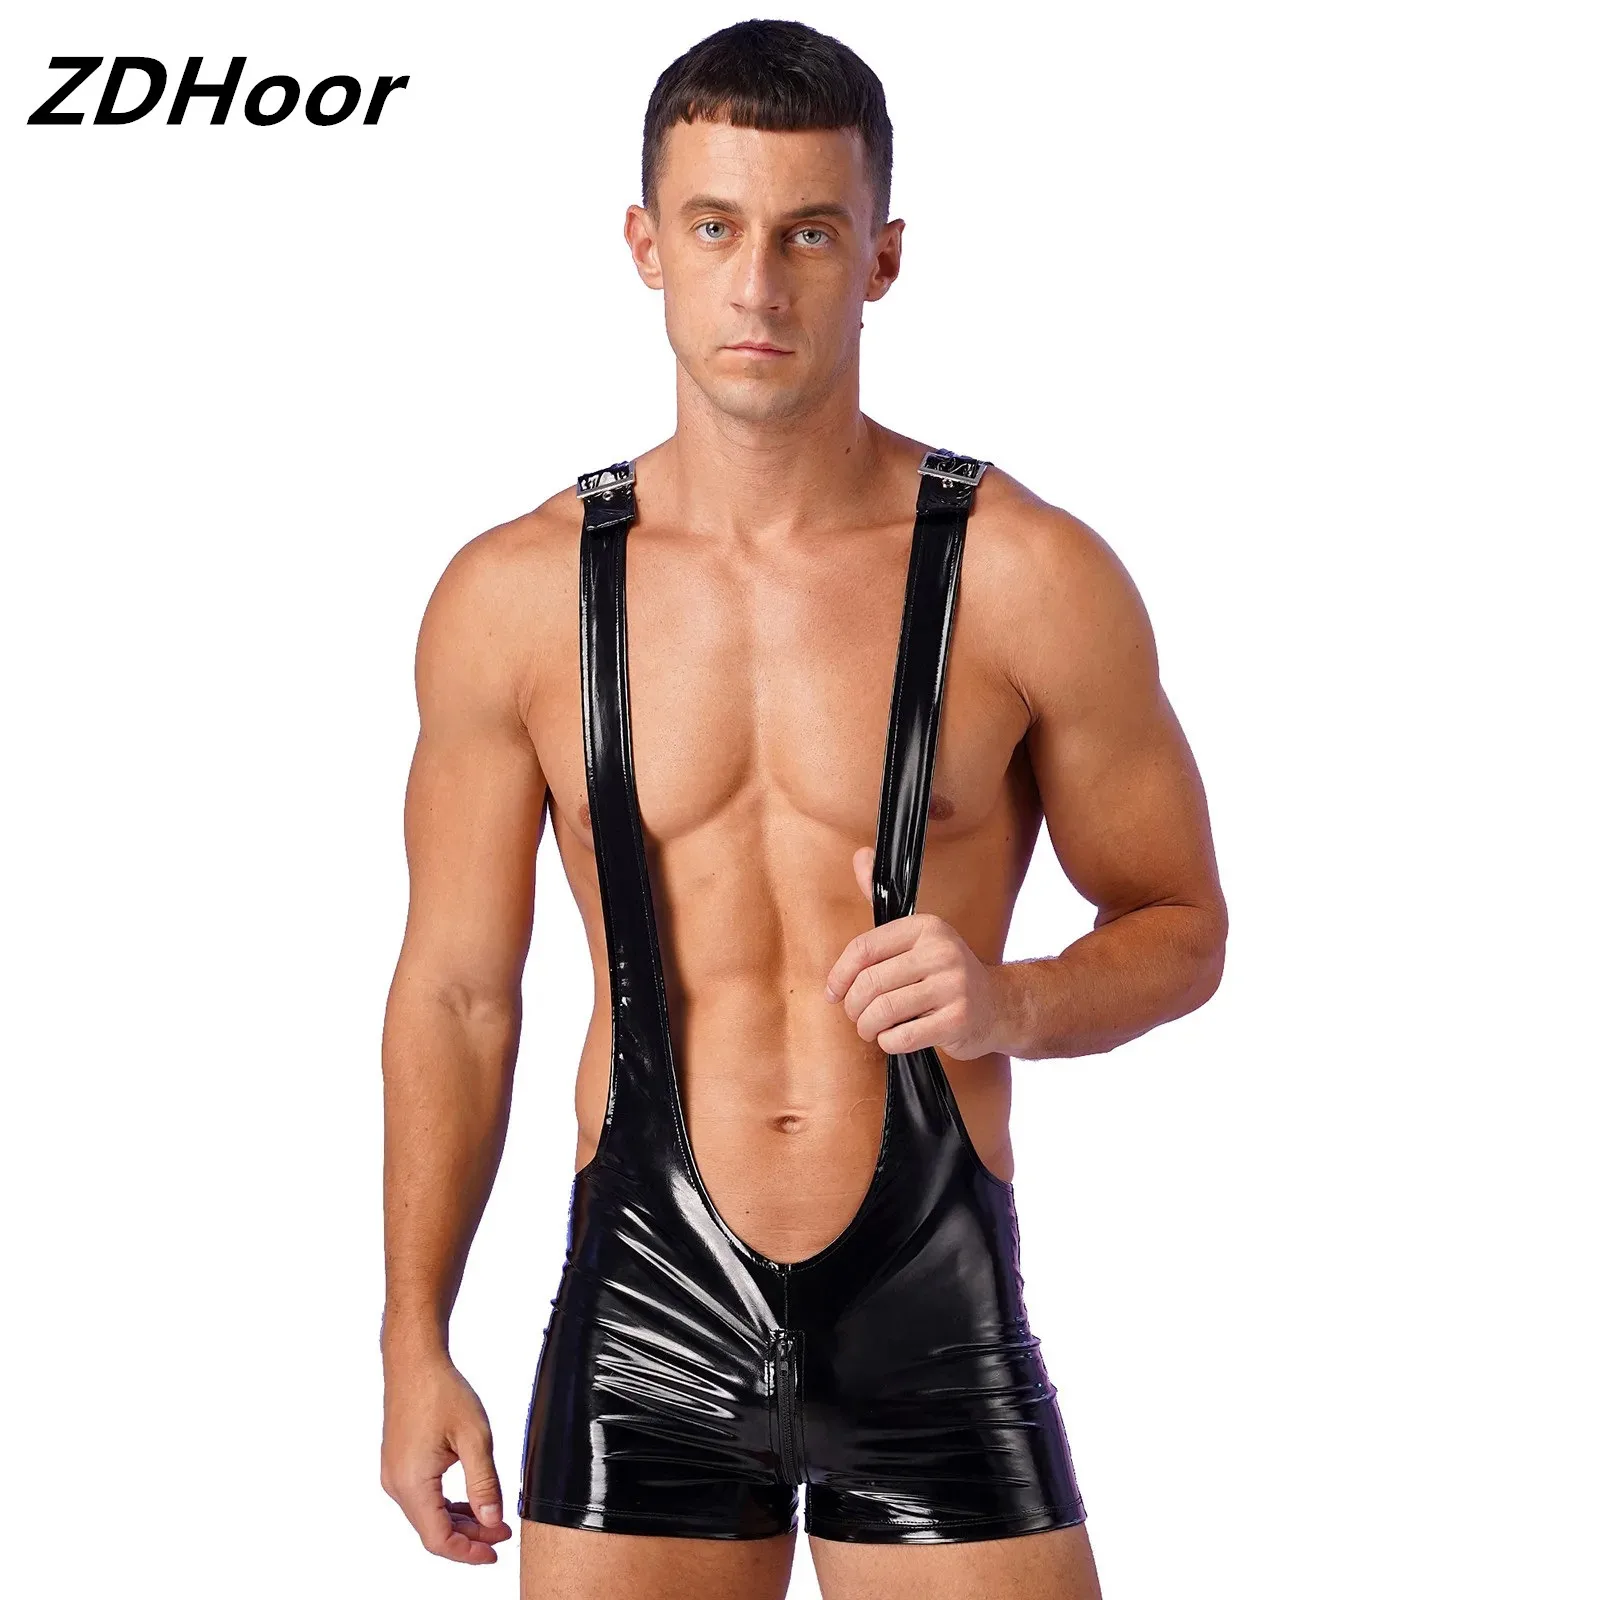 

Mens Glossy Patent Leather Overalls Bodysuit Adjustable Buckle Straps Zipper Crotch Suspenders Shorts Sailor Captain Lingerie